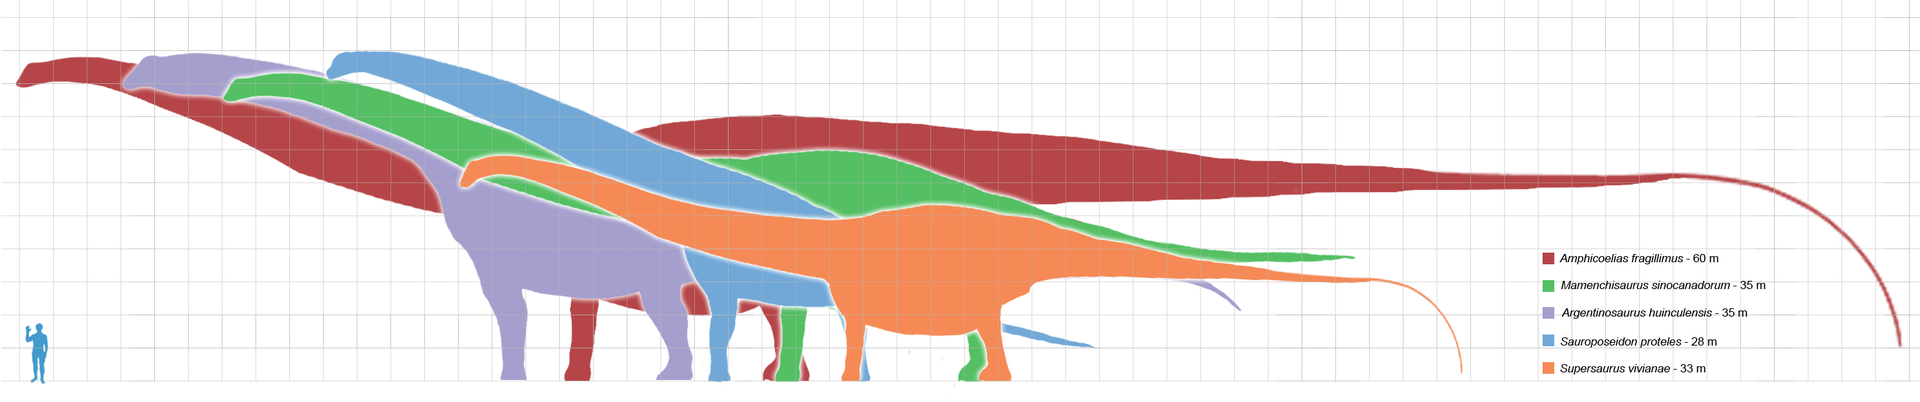 Longest_dinosaurs1